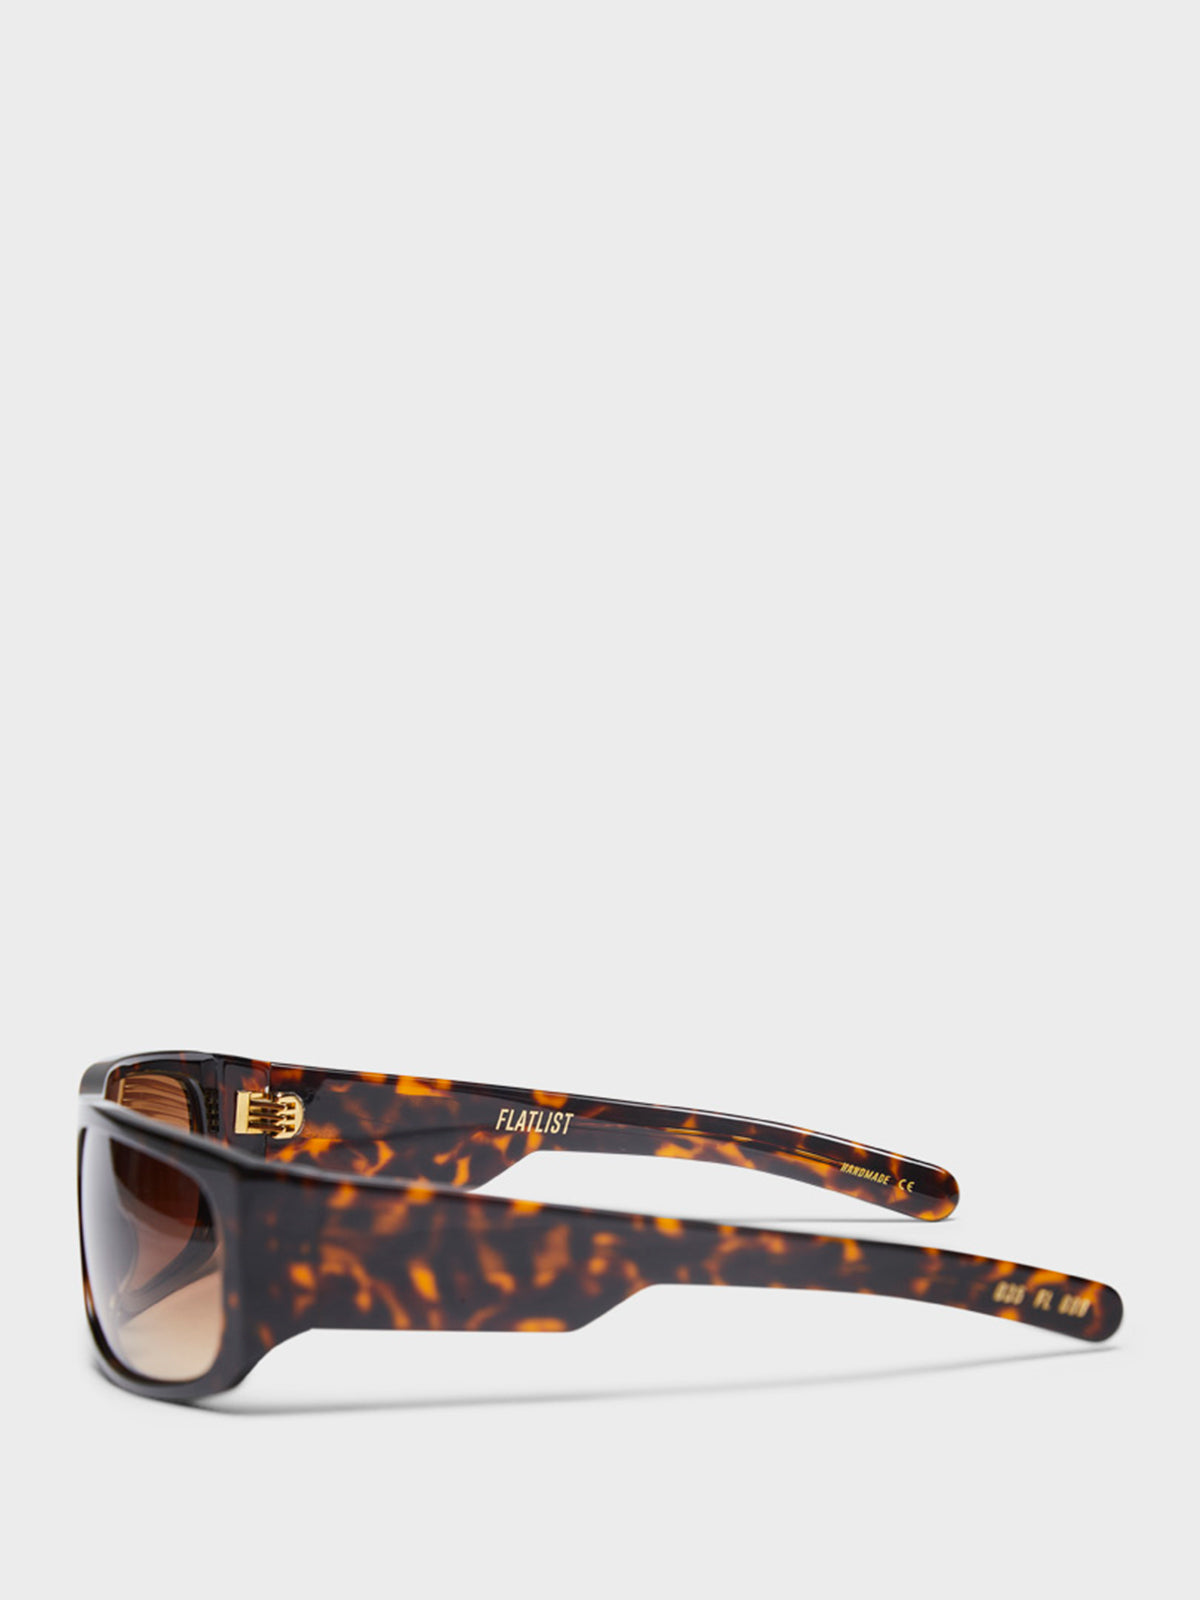 April Sunglasses in Brown and Brown Gradient Lens